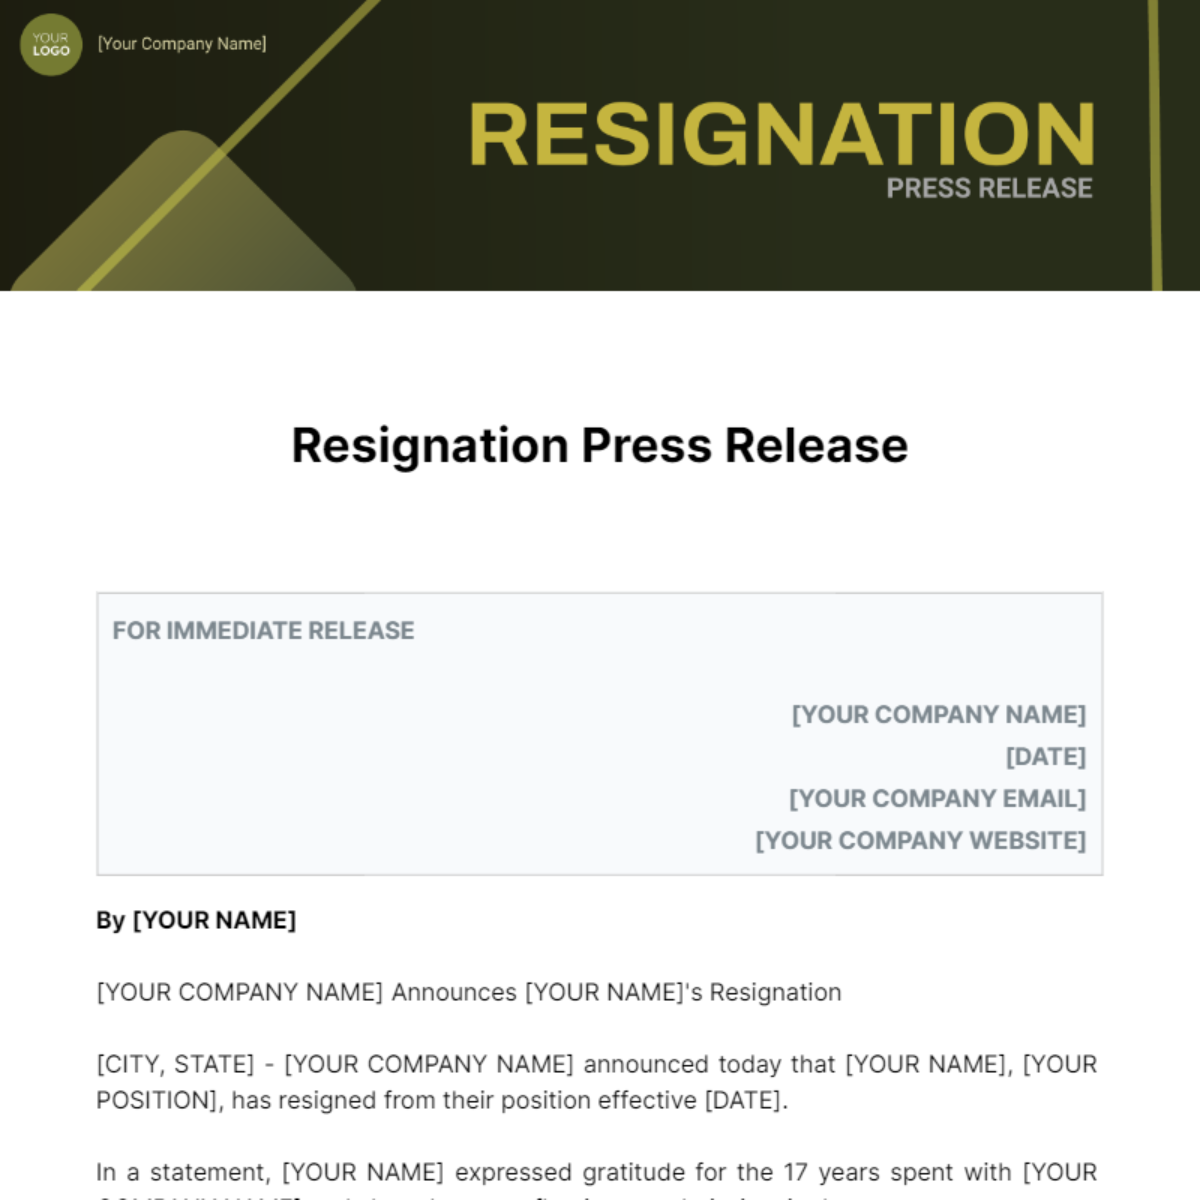 Free Resignation Press Release Template